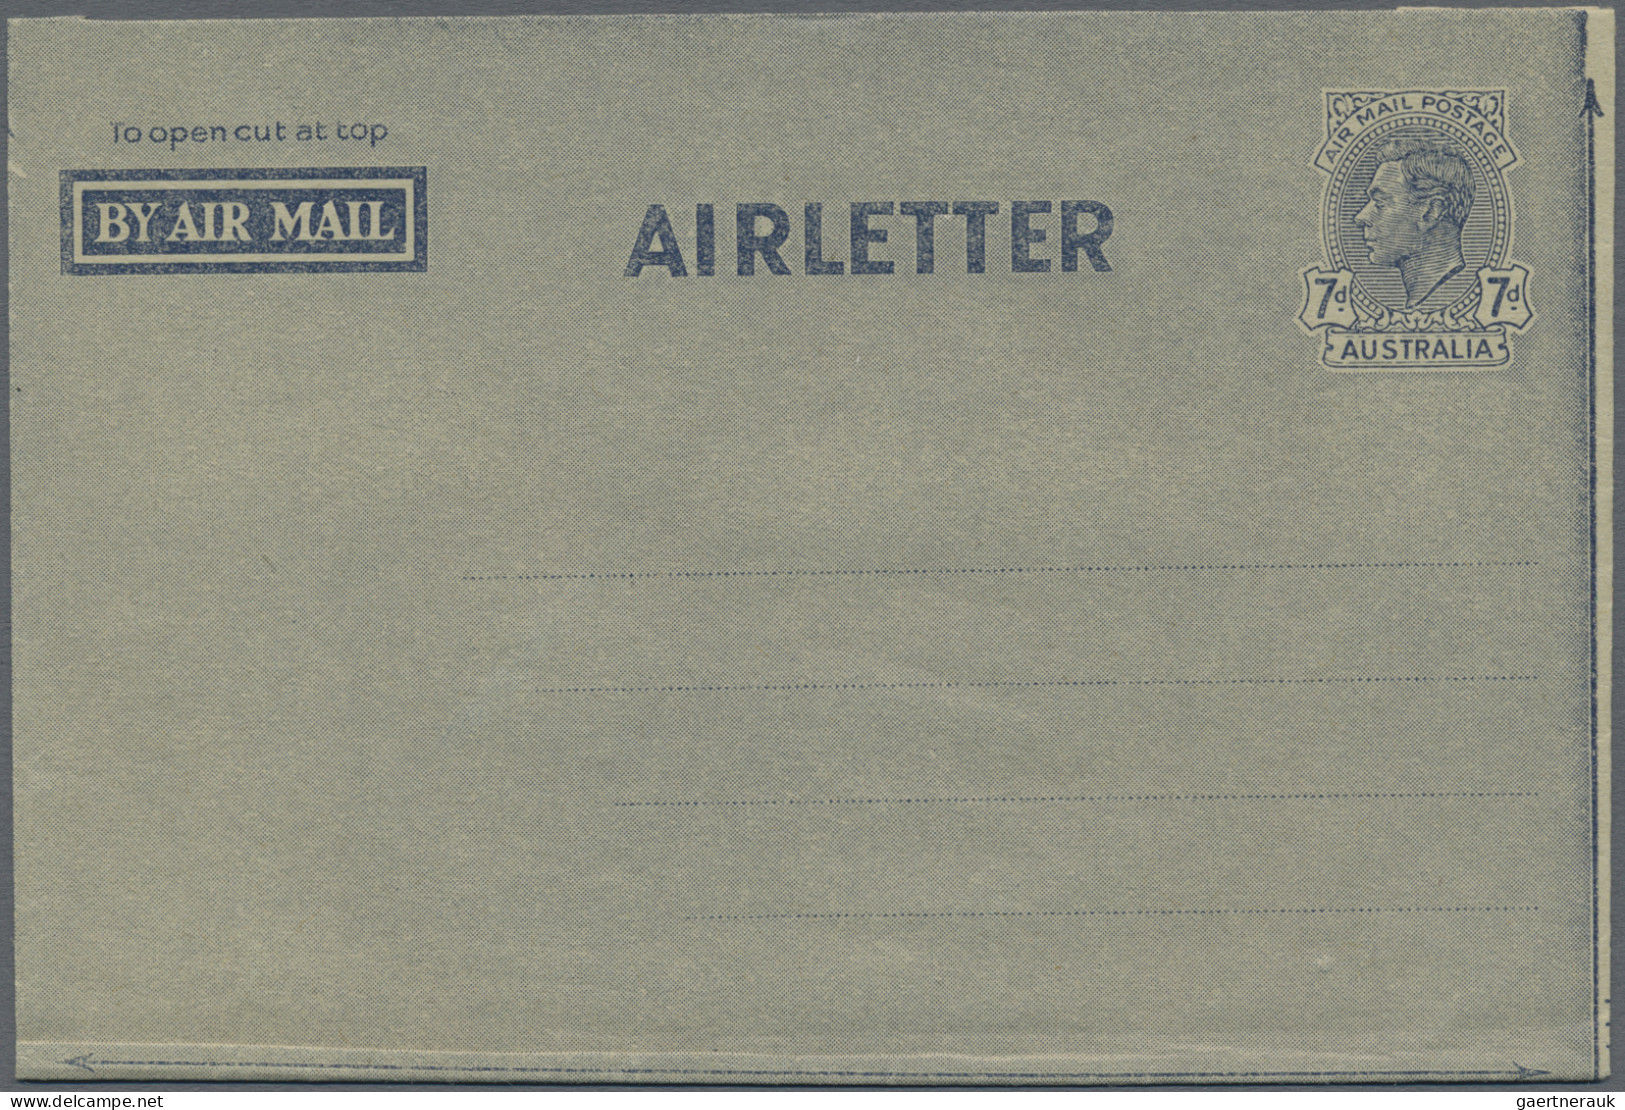 Australia - postal stationery: 1920/1980 (ca.), Australia+some area, balance of